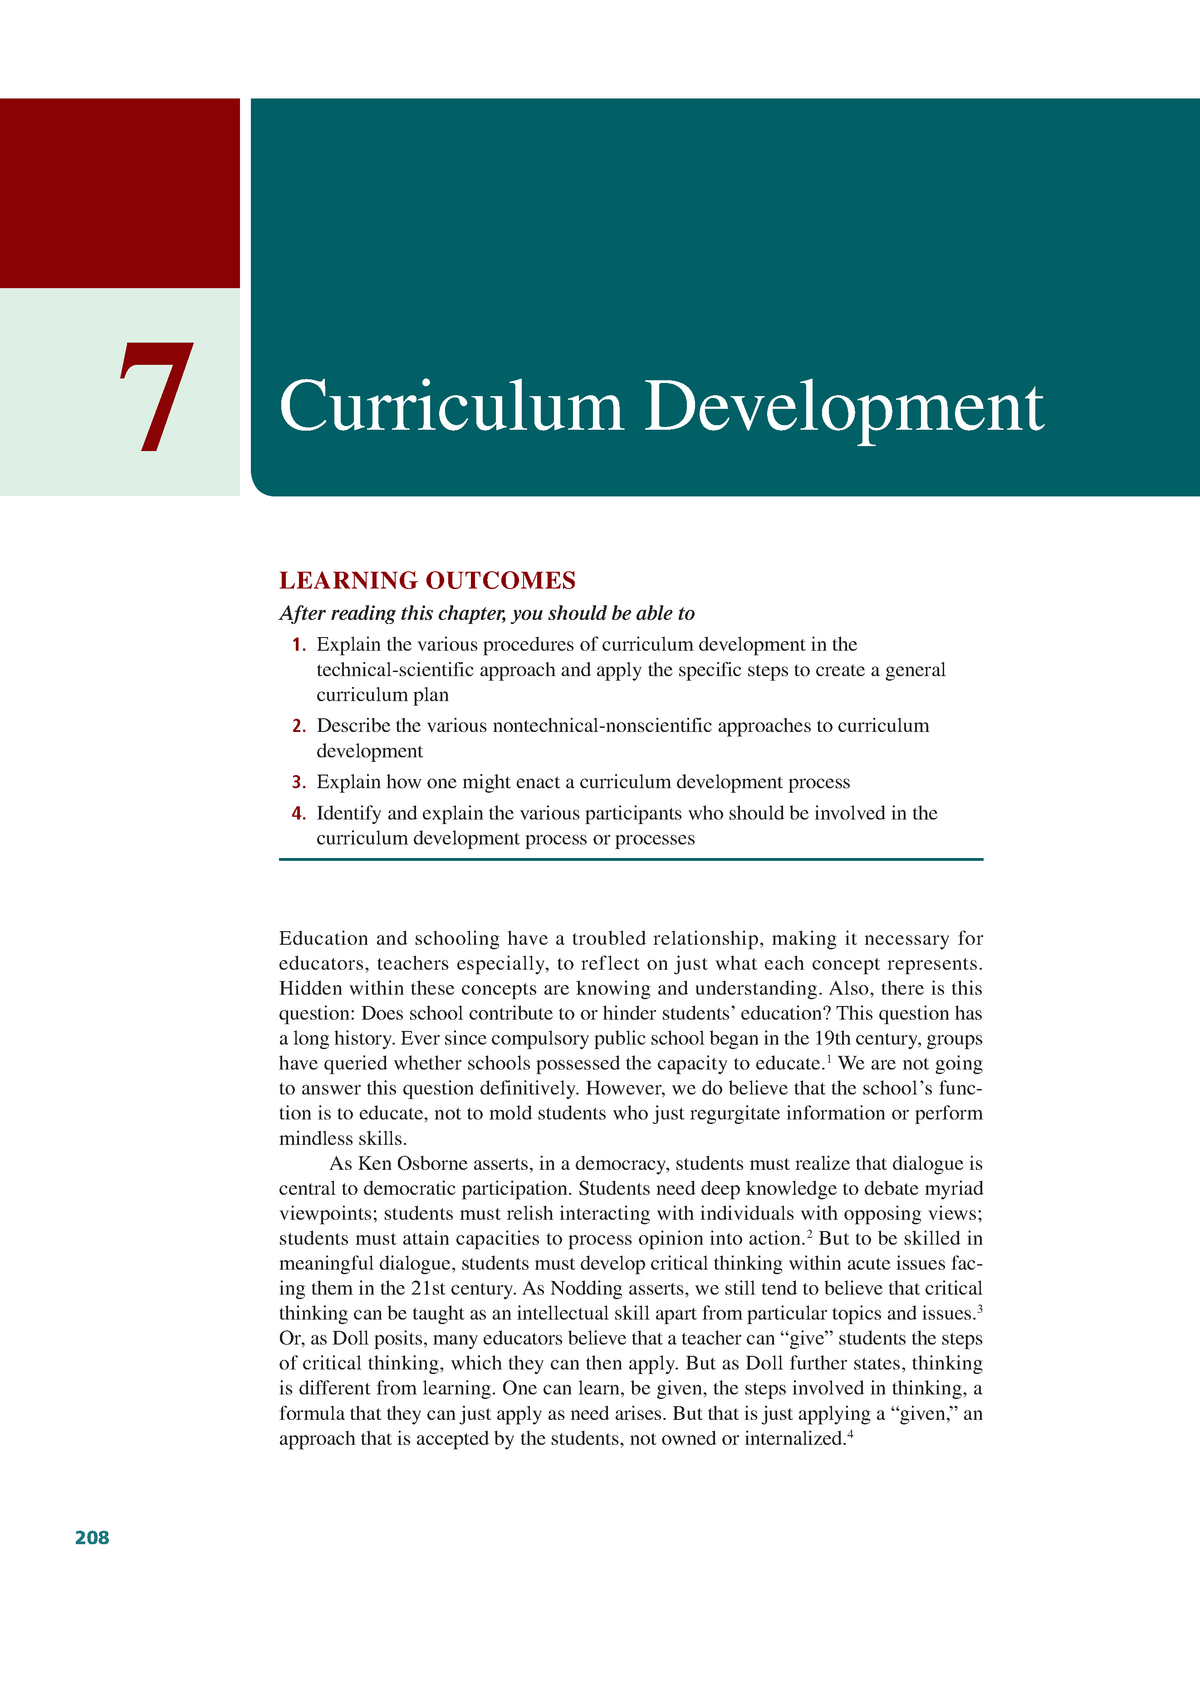 phd thesis on curriculum development